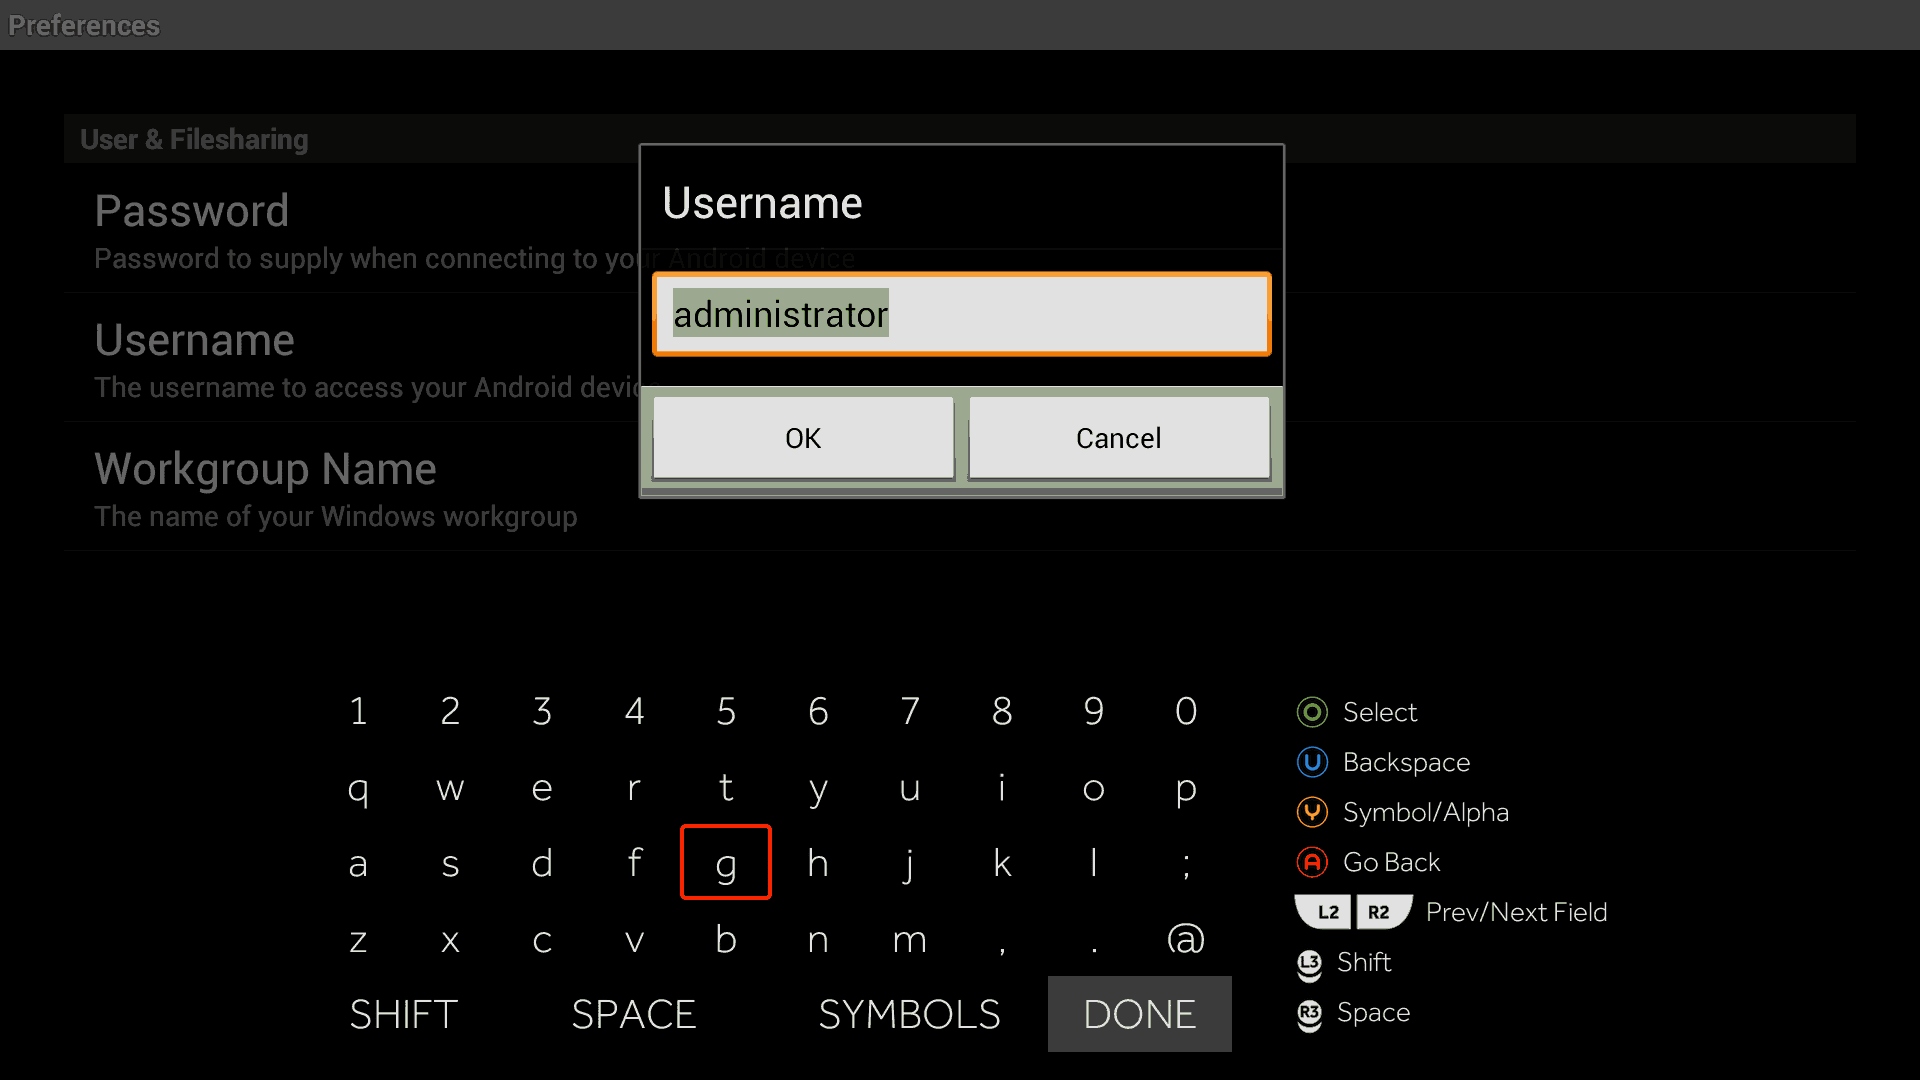 Samba Filesharing Username Screen on the Ouya